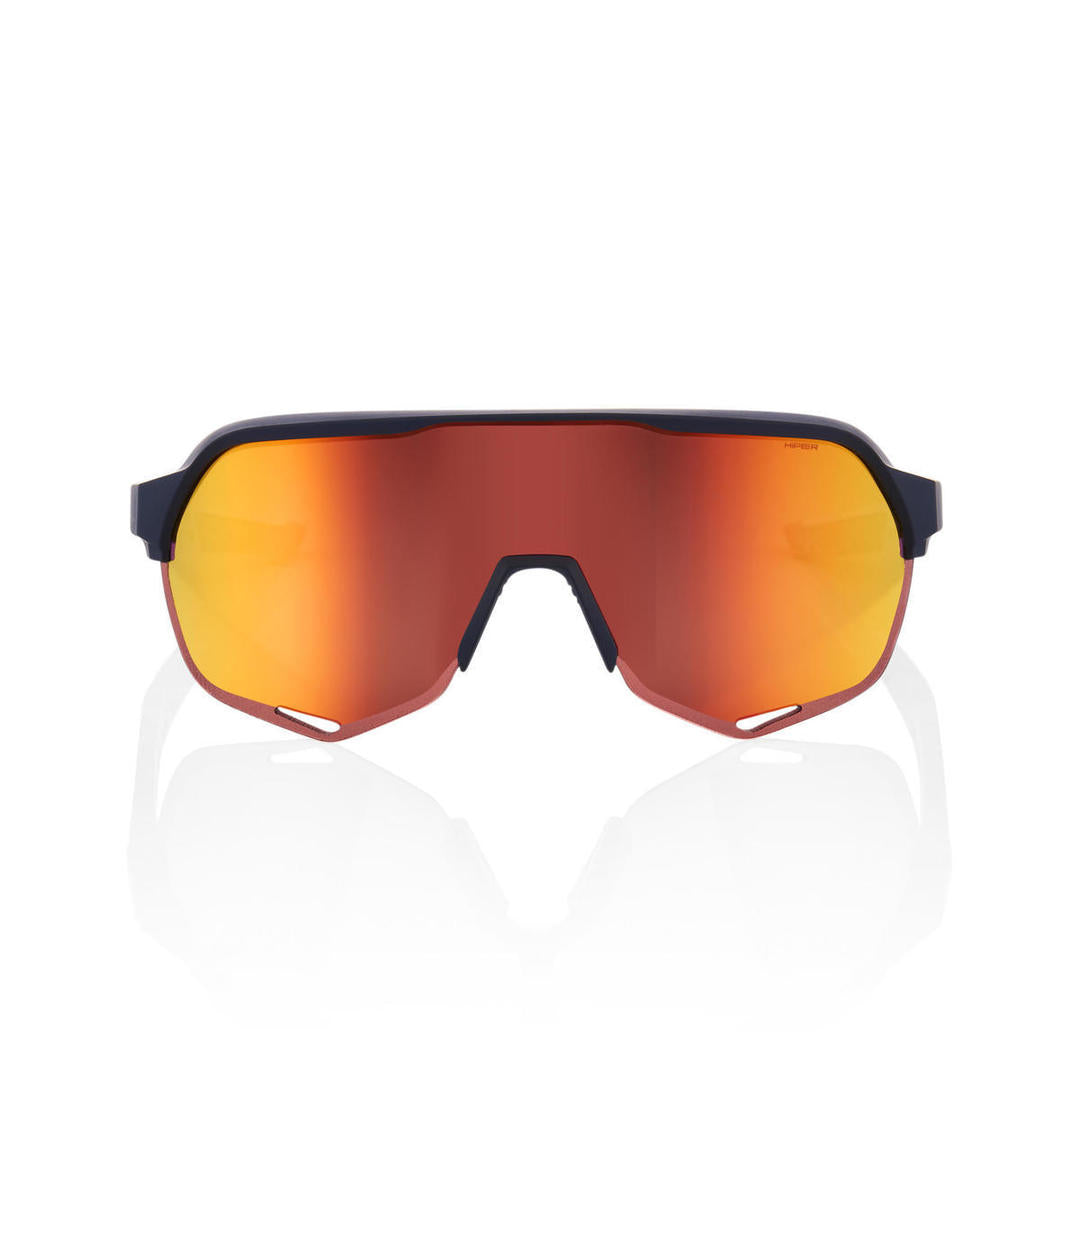 RIDE 100% Gafas de Sol S2 Soft Tact Flume Hiper Red Multilayer Mirror Lens - Color Flume